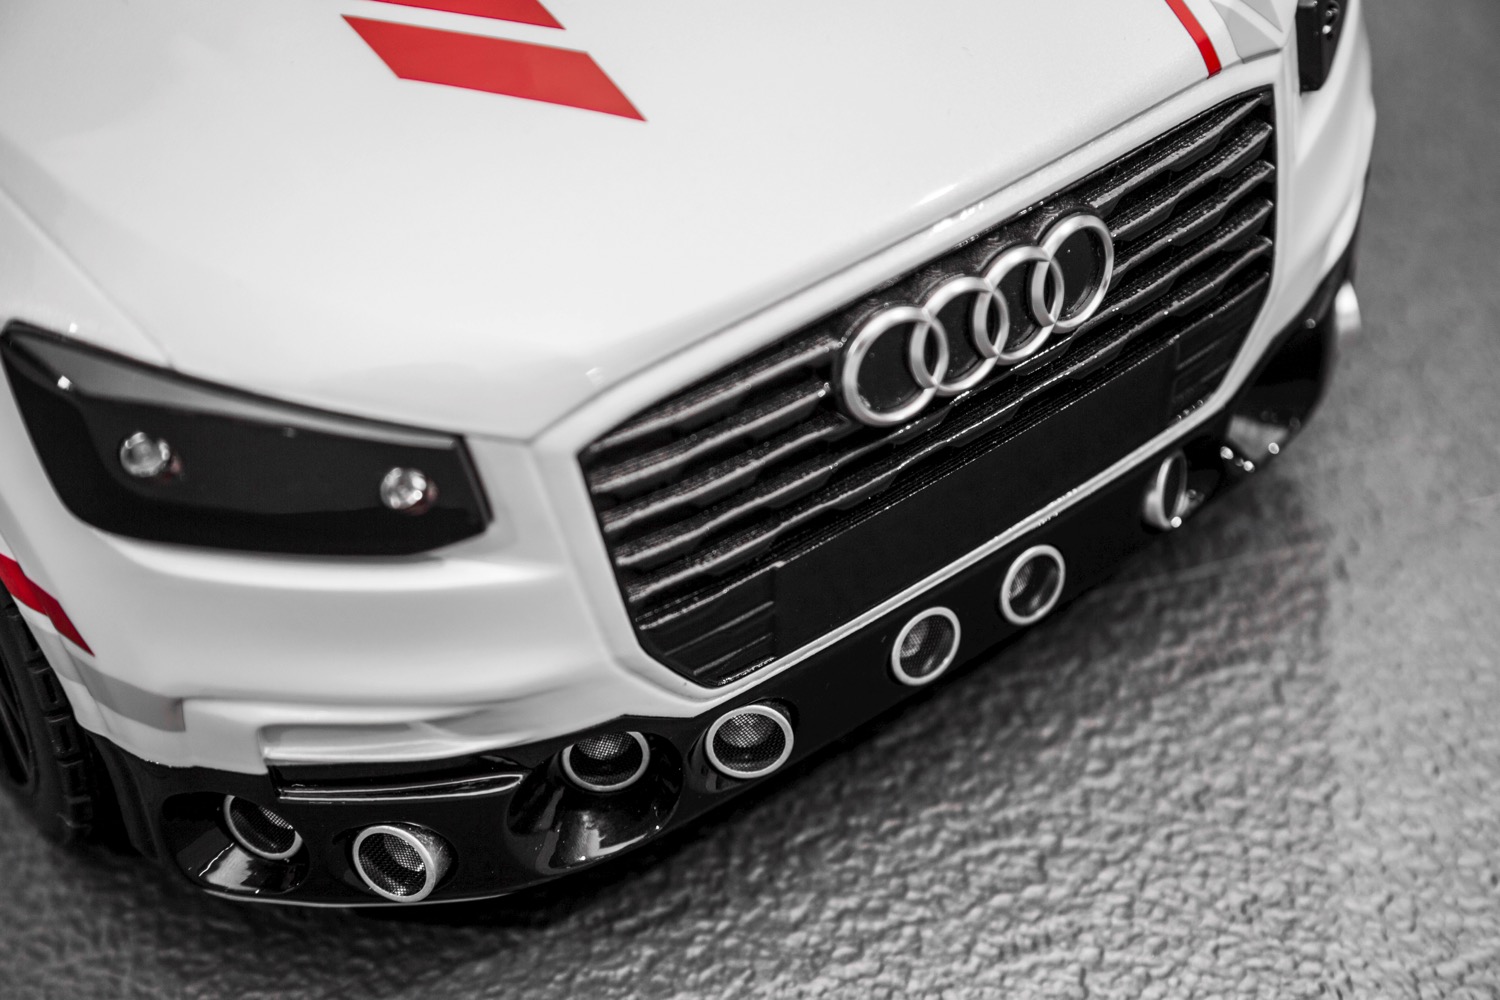 Audi Q2 deep learning concept